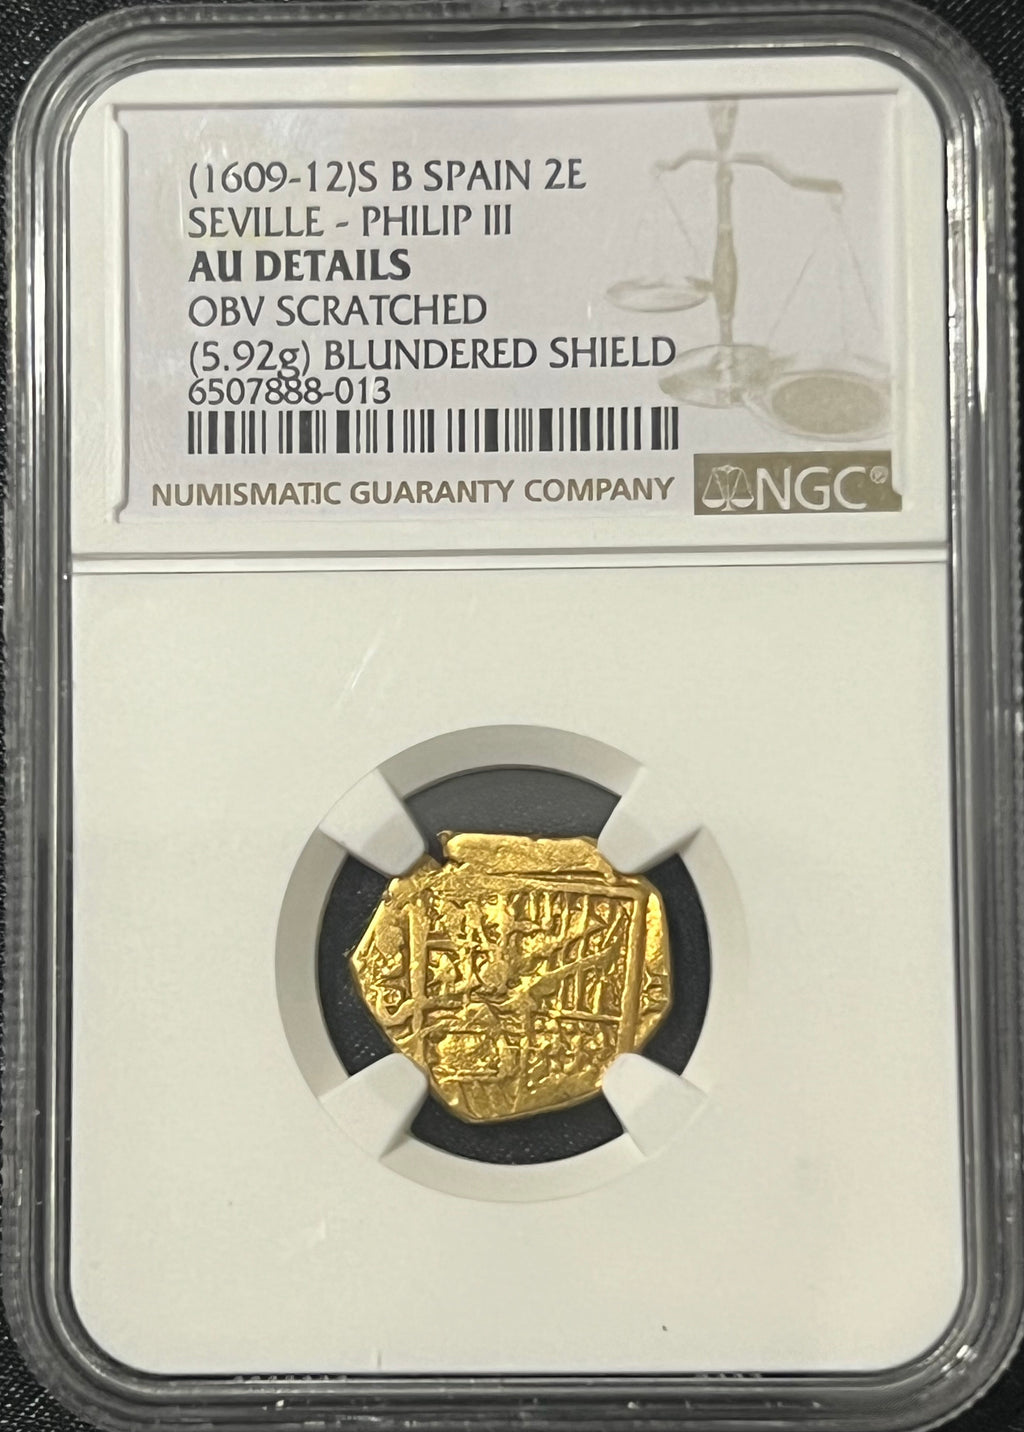 2 Escudos Seville, Spain Gold Coin NGC Grade AU Details